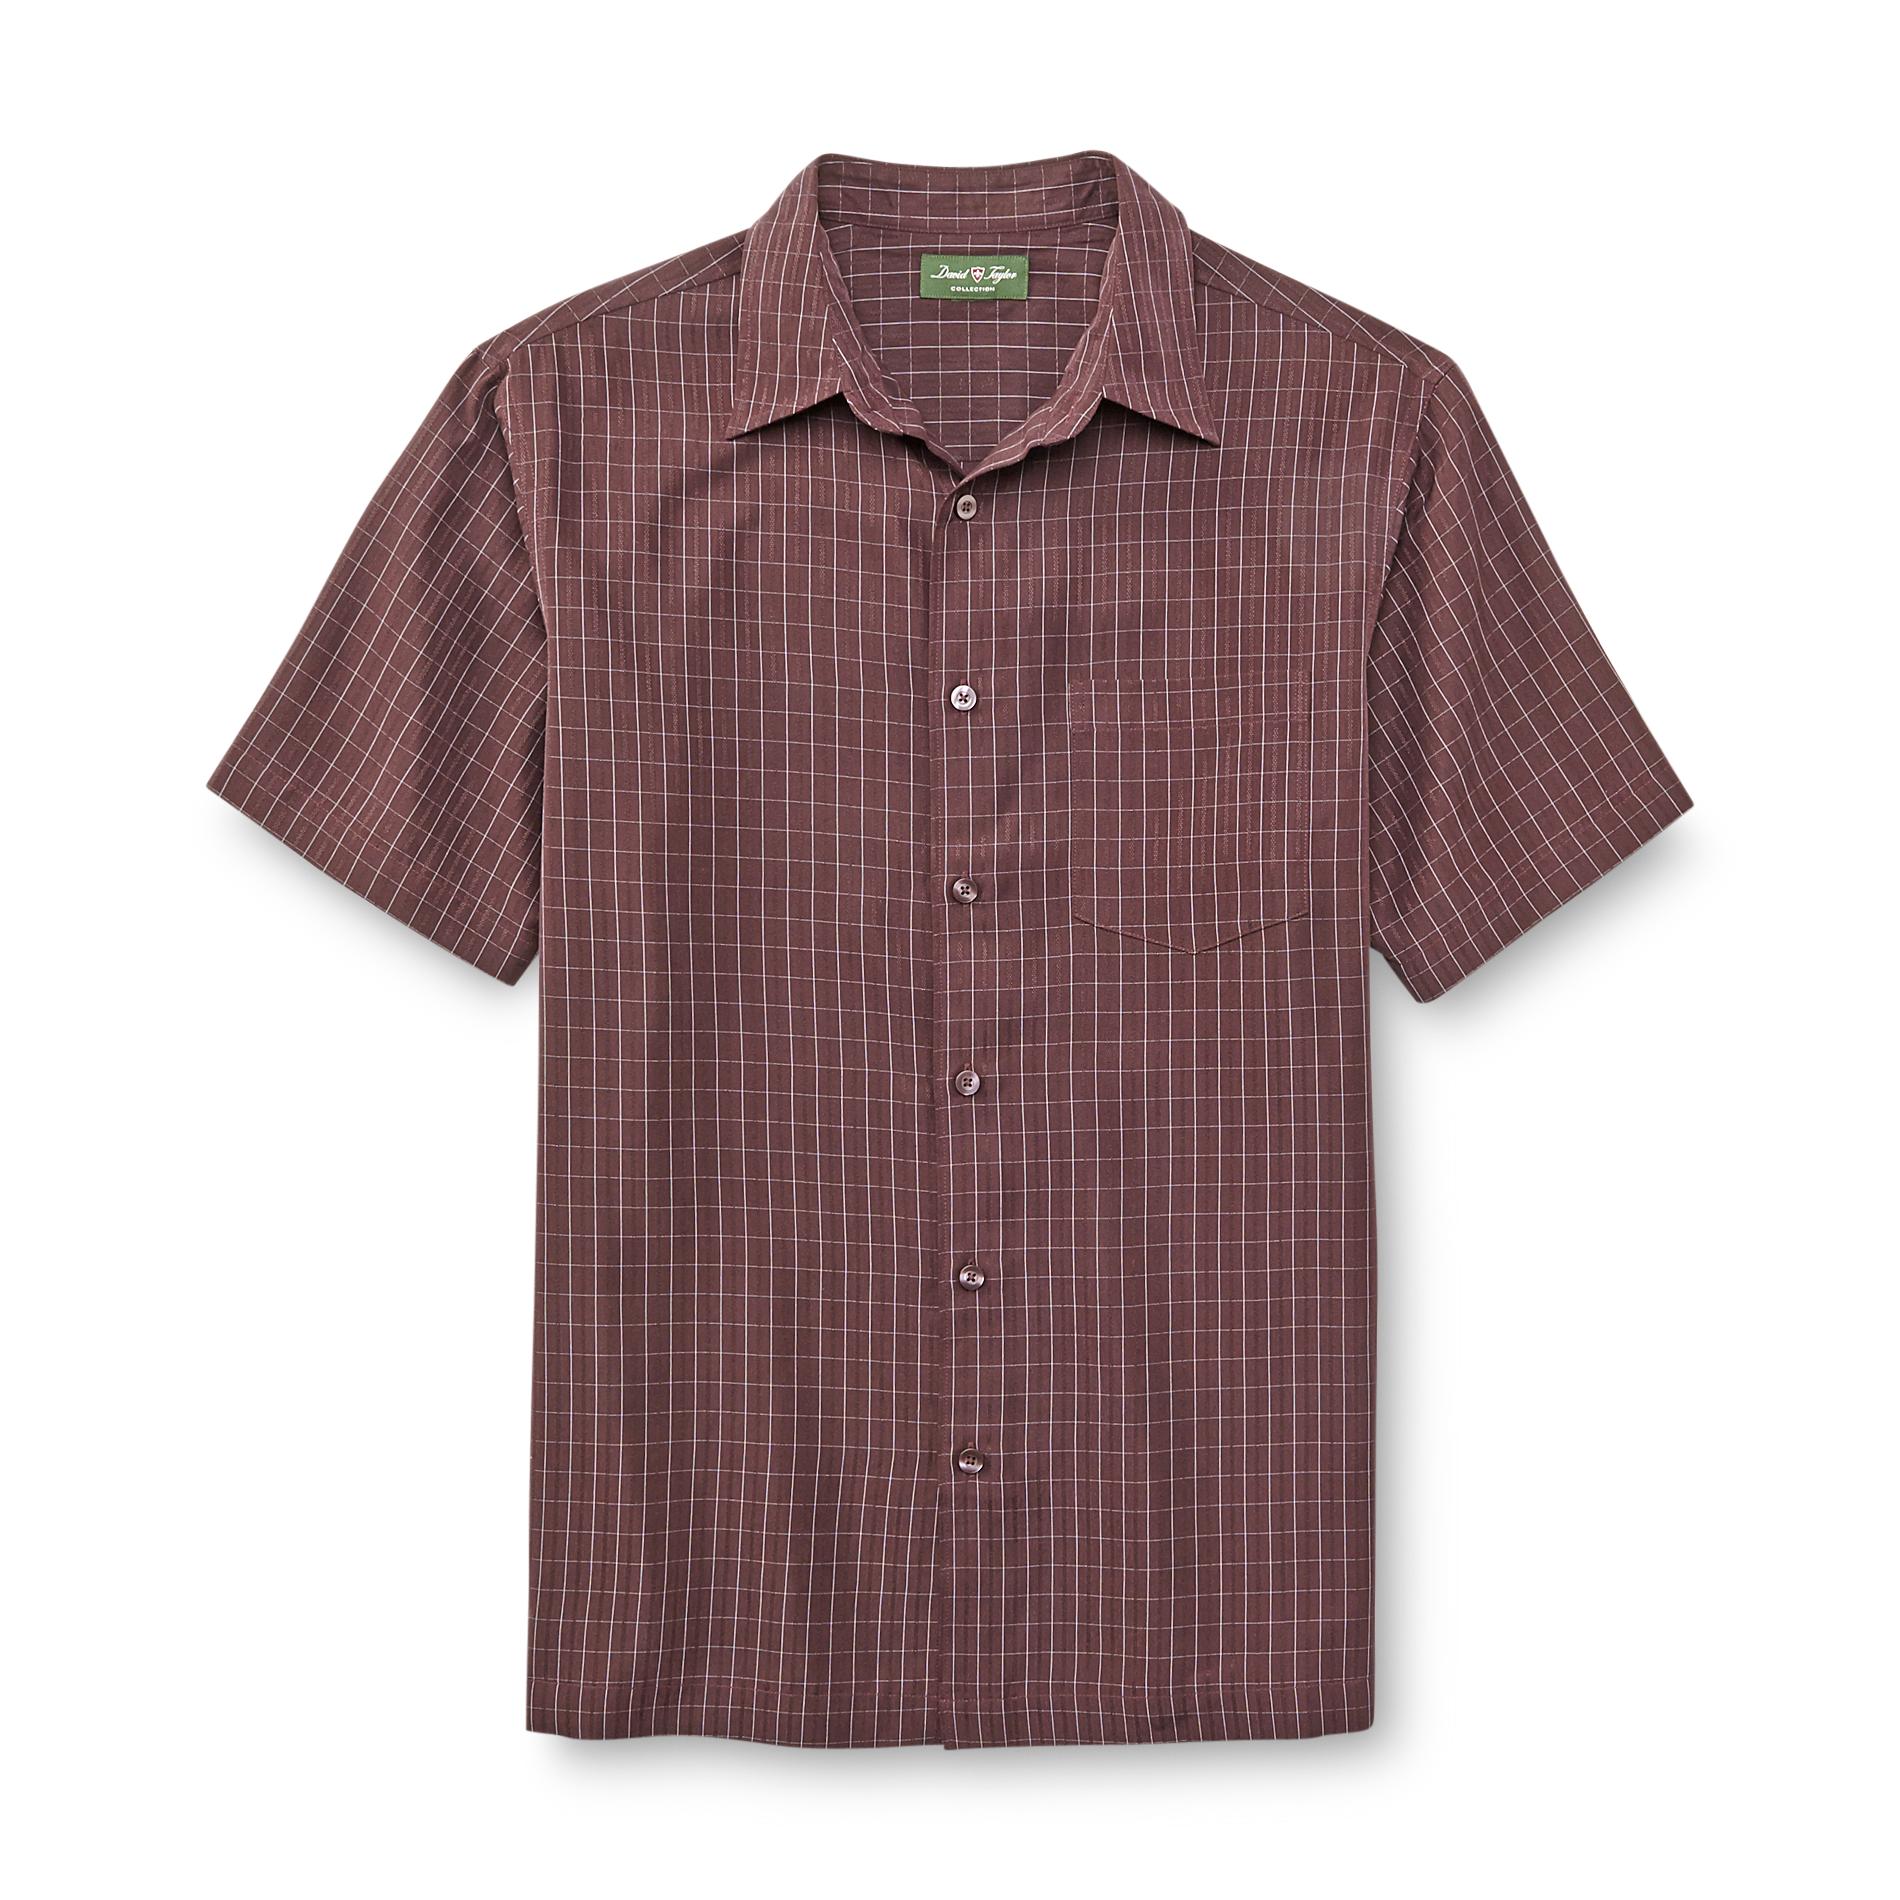 David Taylor Collection Men's Short-Sleeve Casual Shirt - Dobby Check